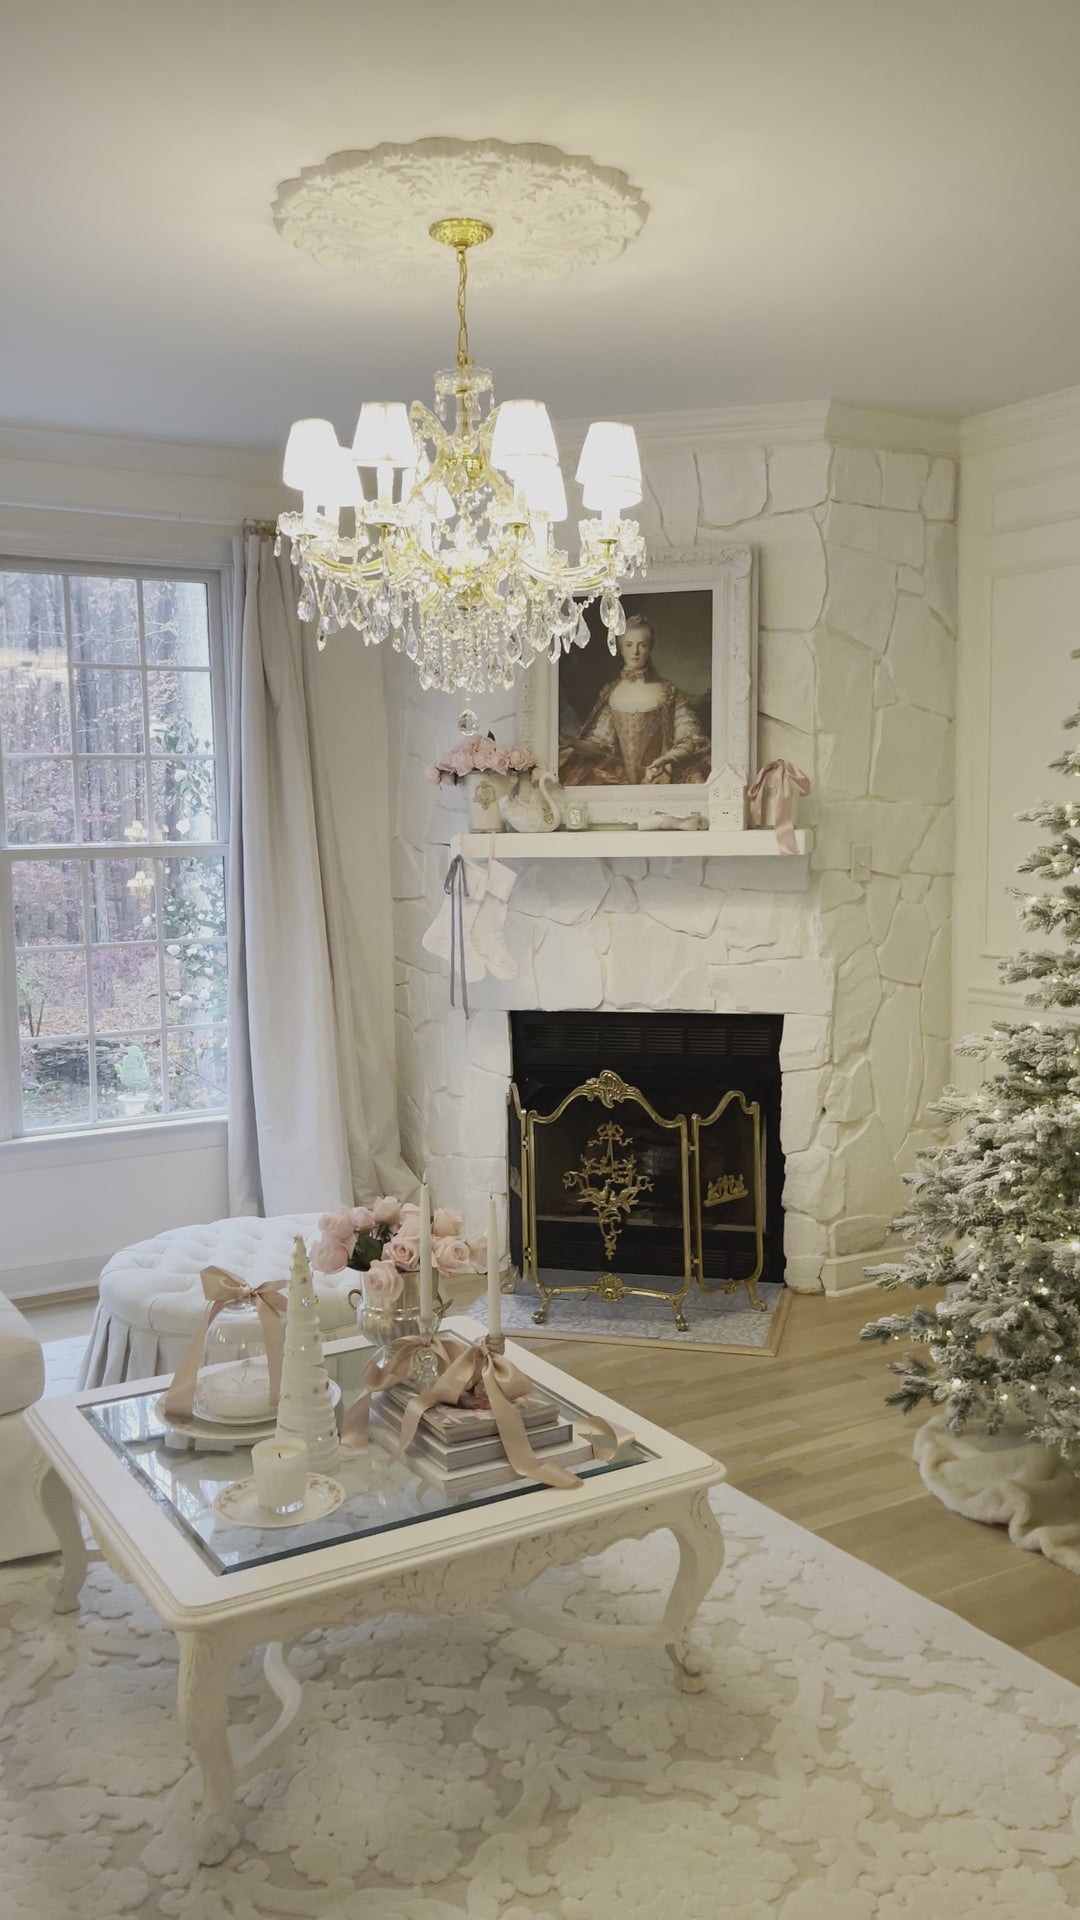 King of Christmas 9' Rushmore Flock Quick-Shape Tree 1000 Warm White Led Lights